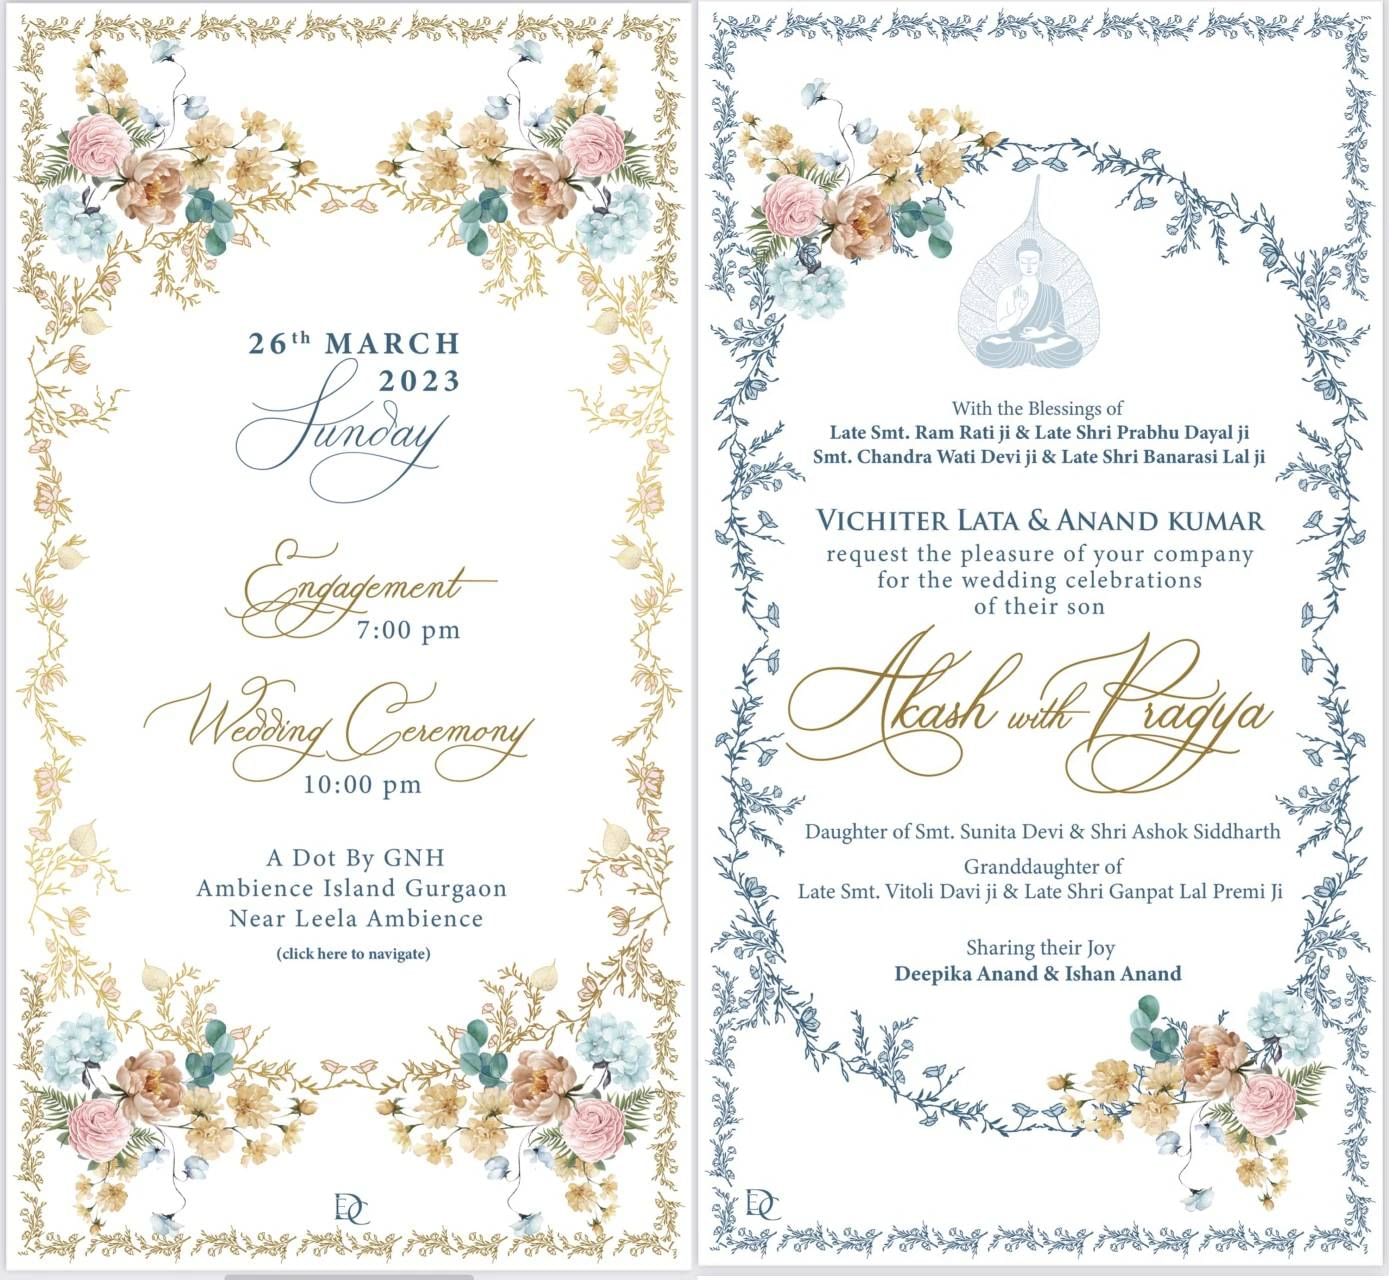 mayawati nephew wedding card